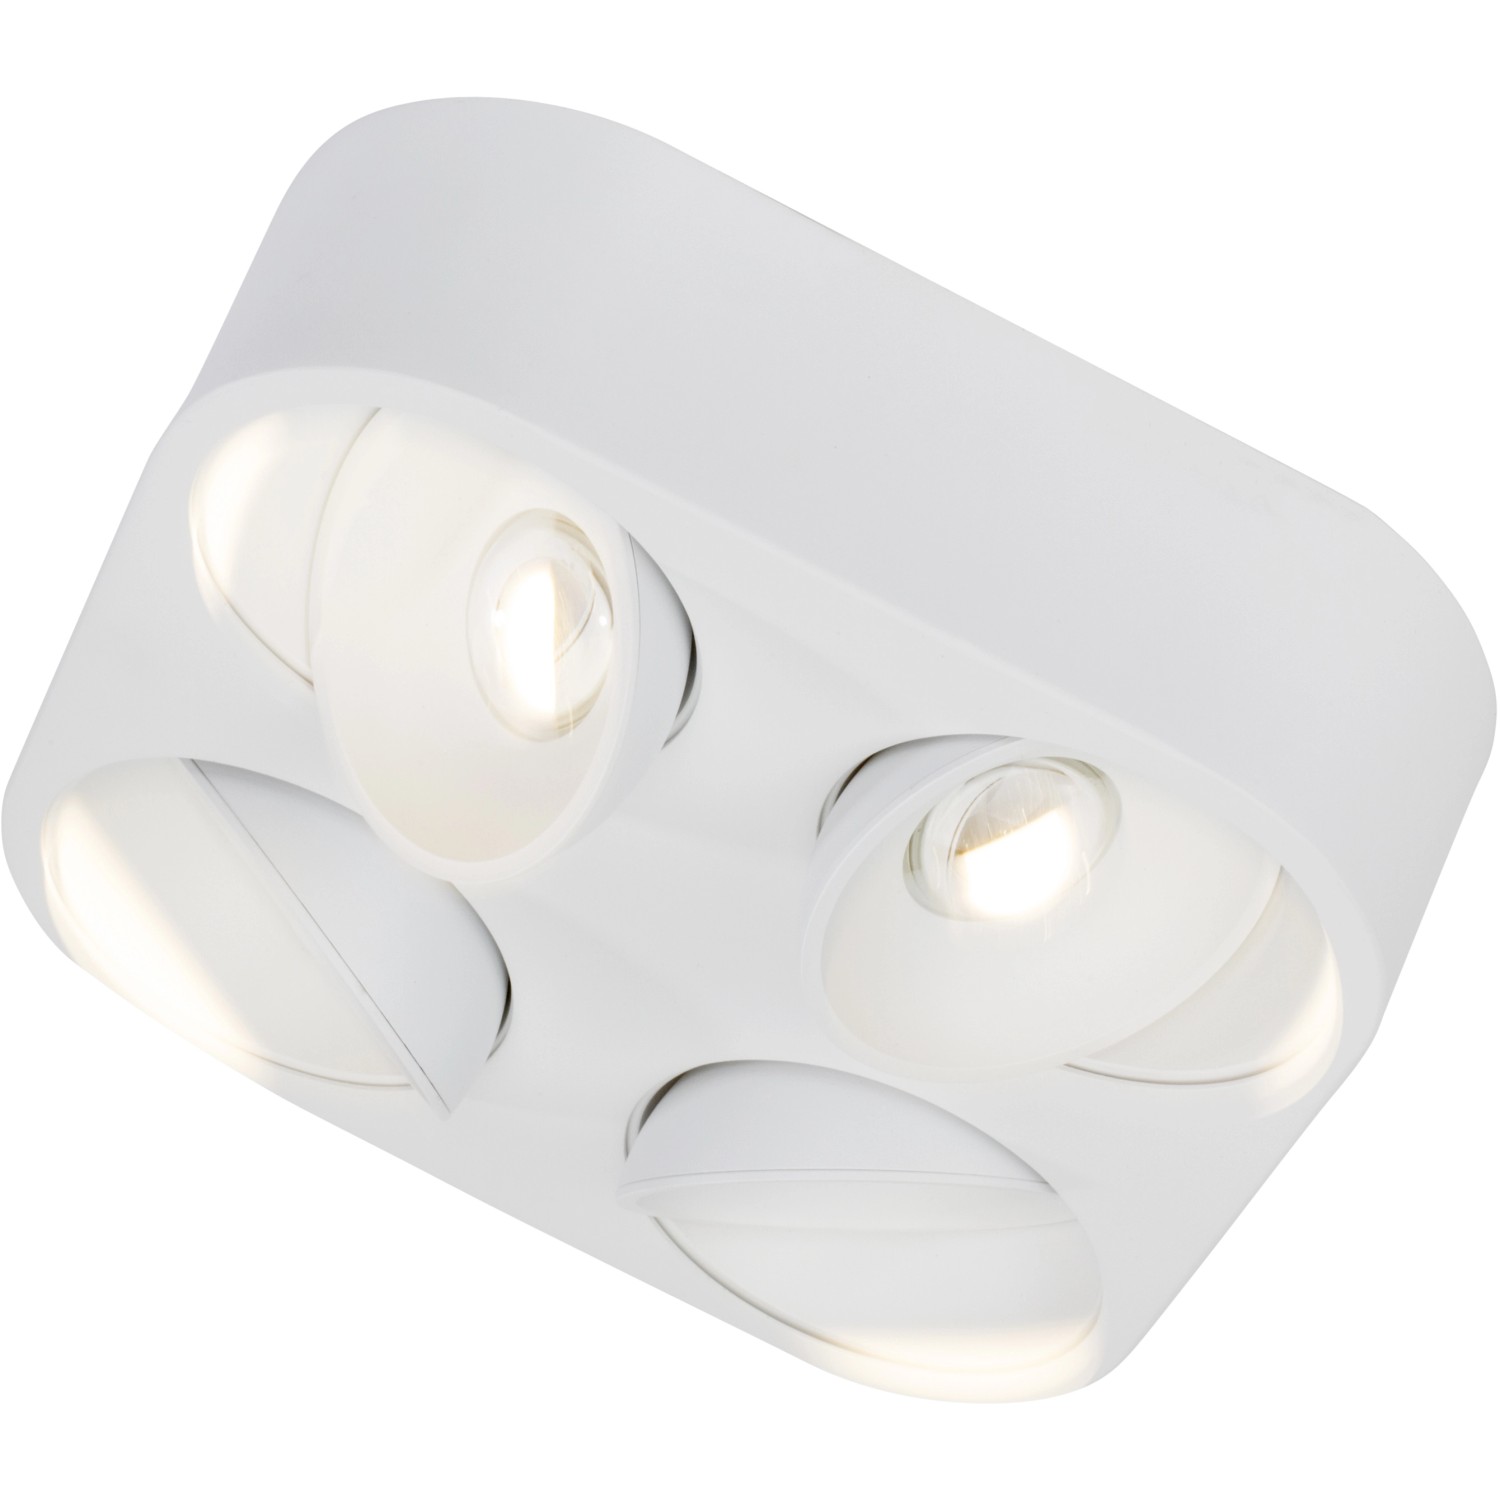 AEG LED-Spot bei 7 cm kaufen und x dimmbar x 26,3 Leca OBI cm 26,3 cm schwenkbar